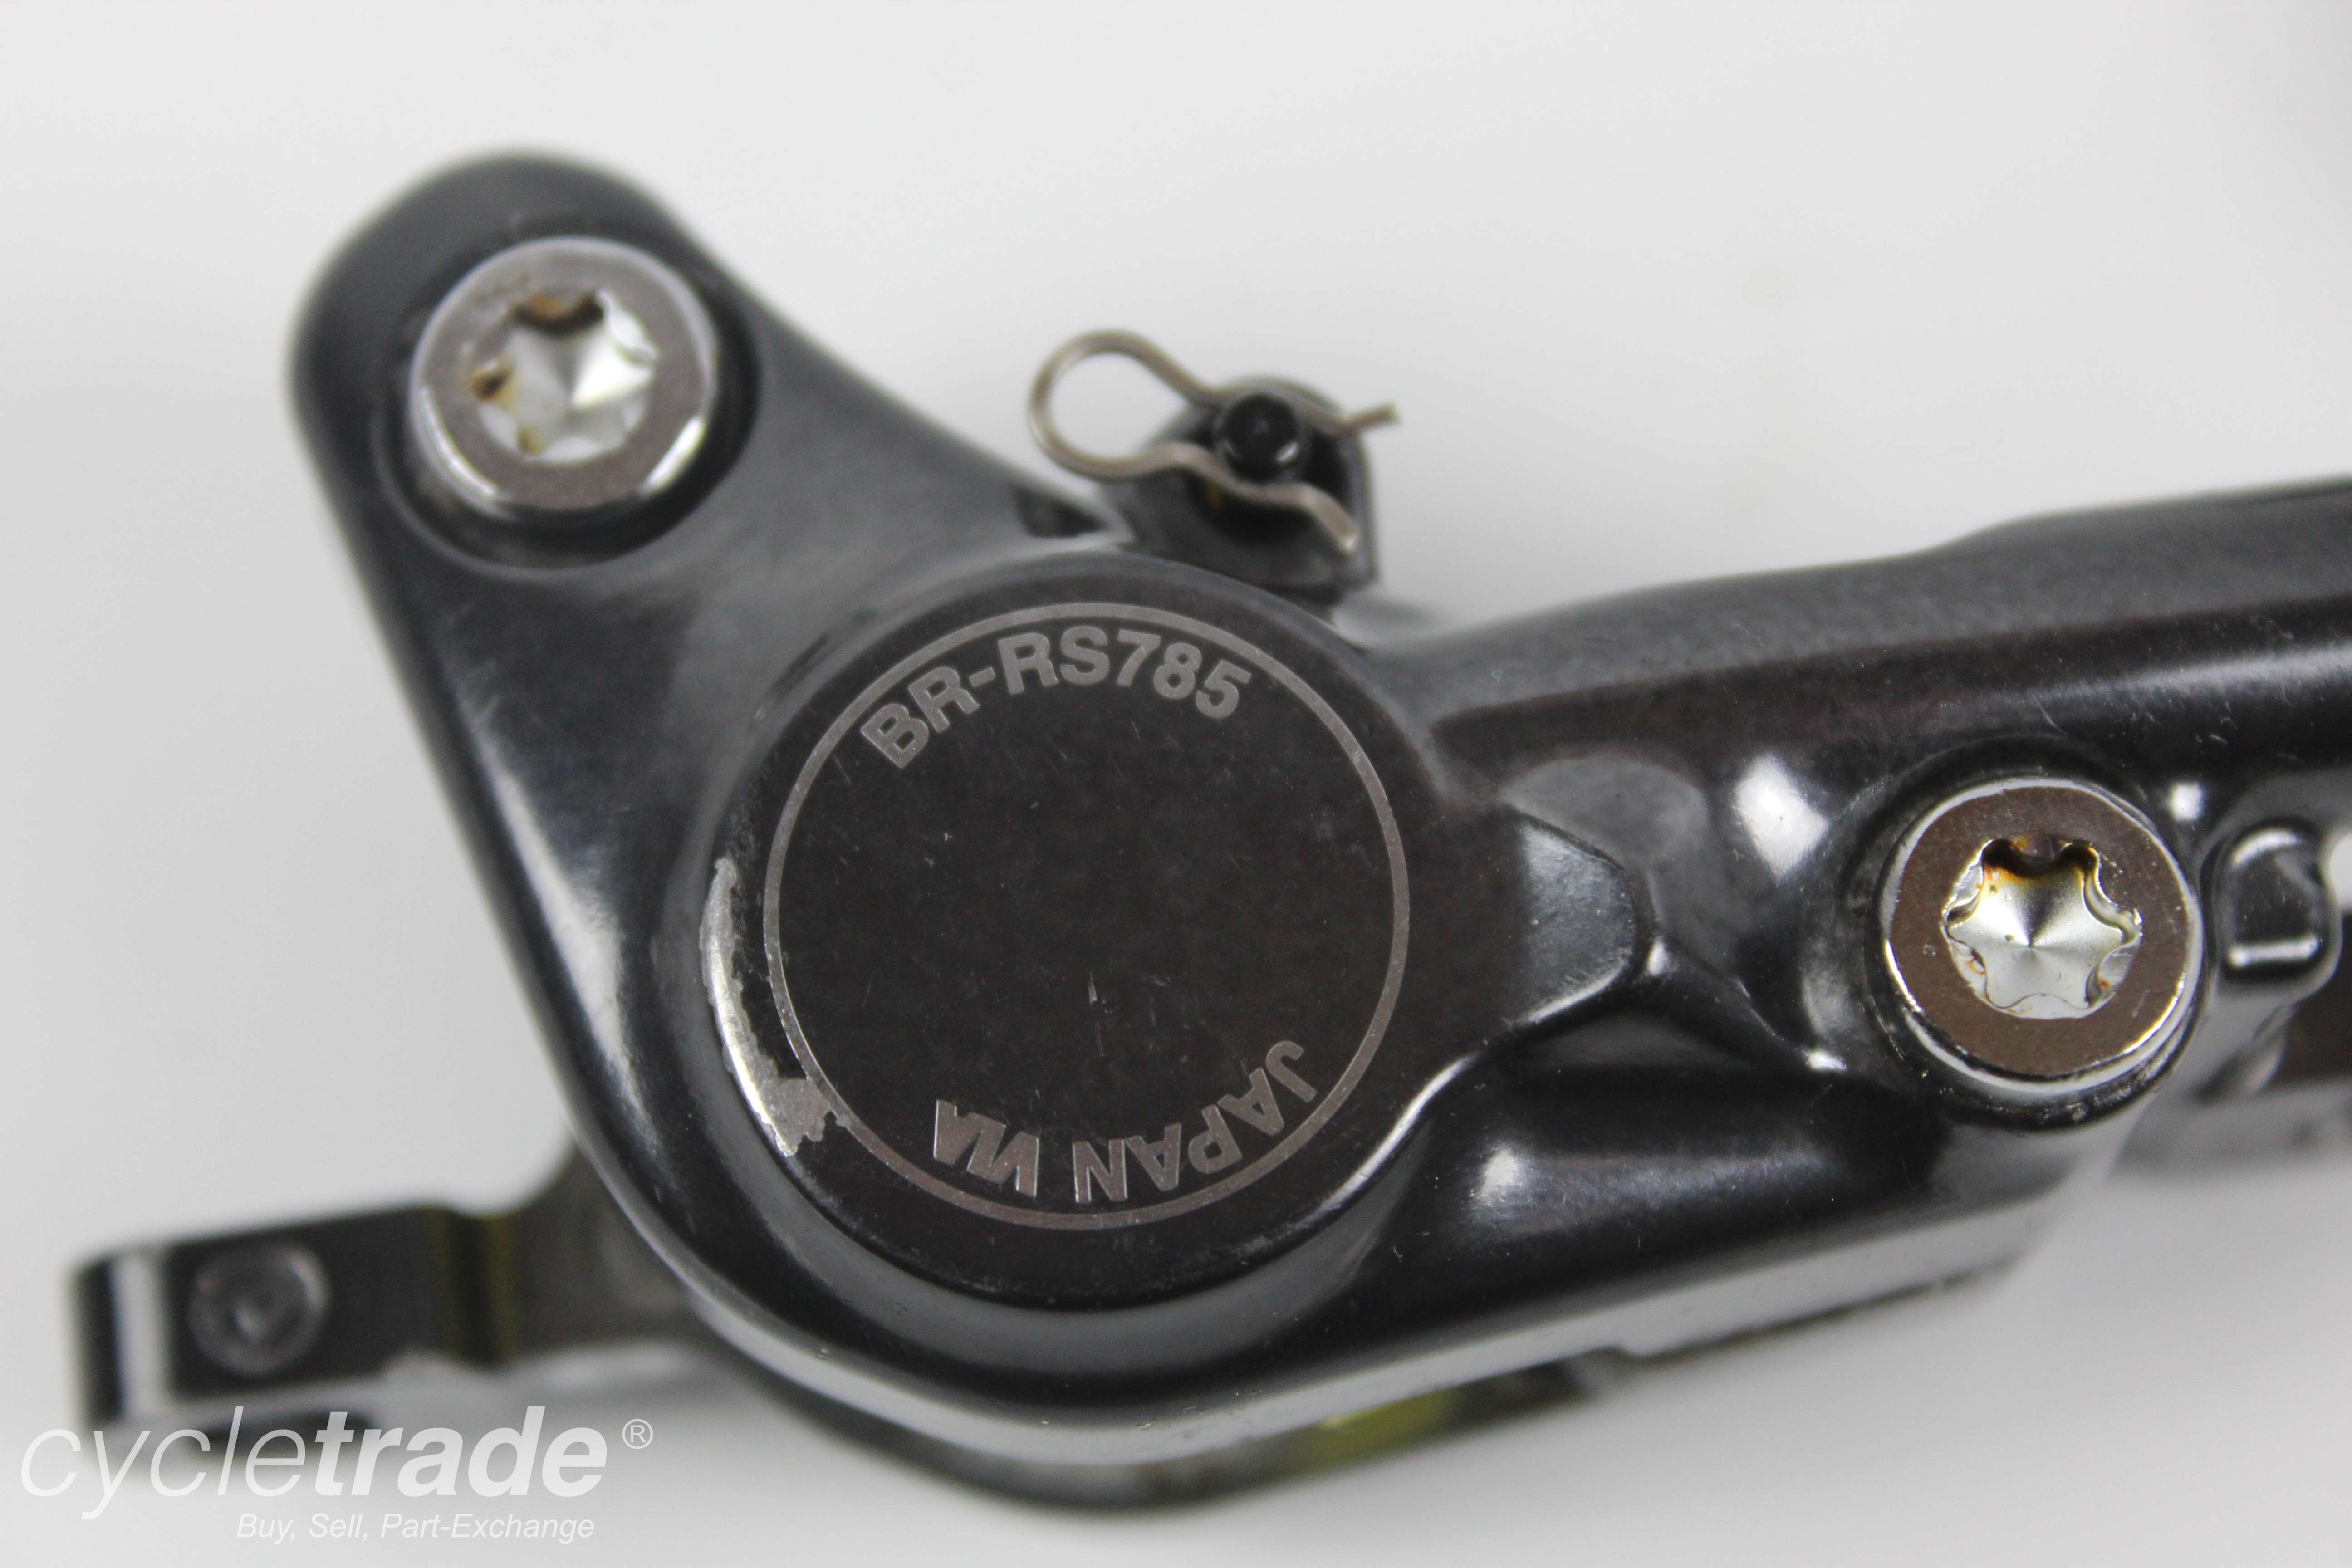 Hydraulic Disc Brake Calipers - Shimano BR-RS785 Post Mount - Grade B+